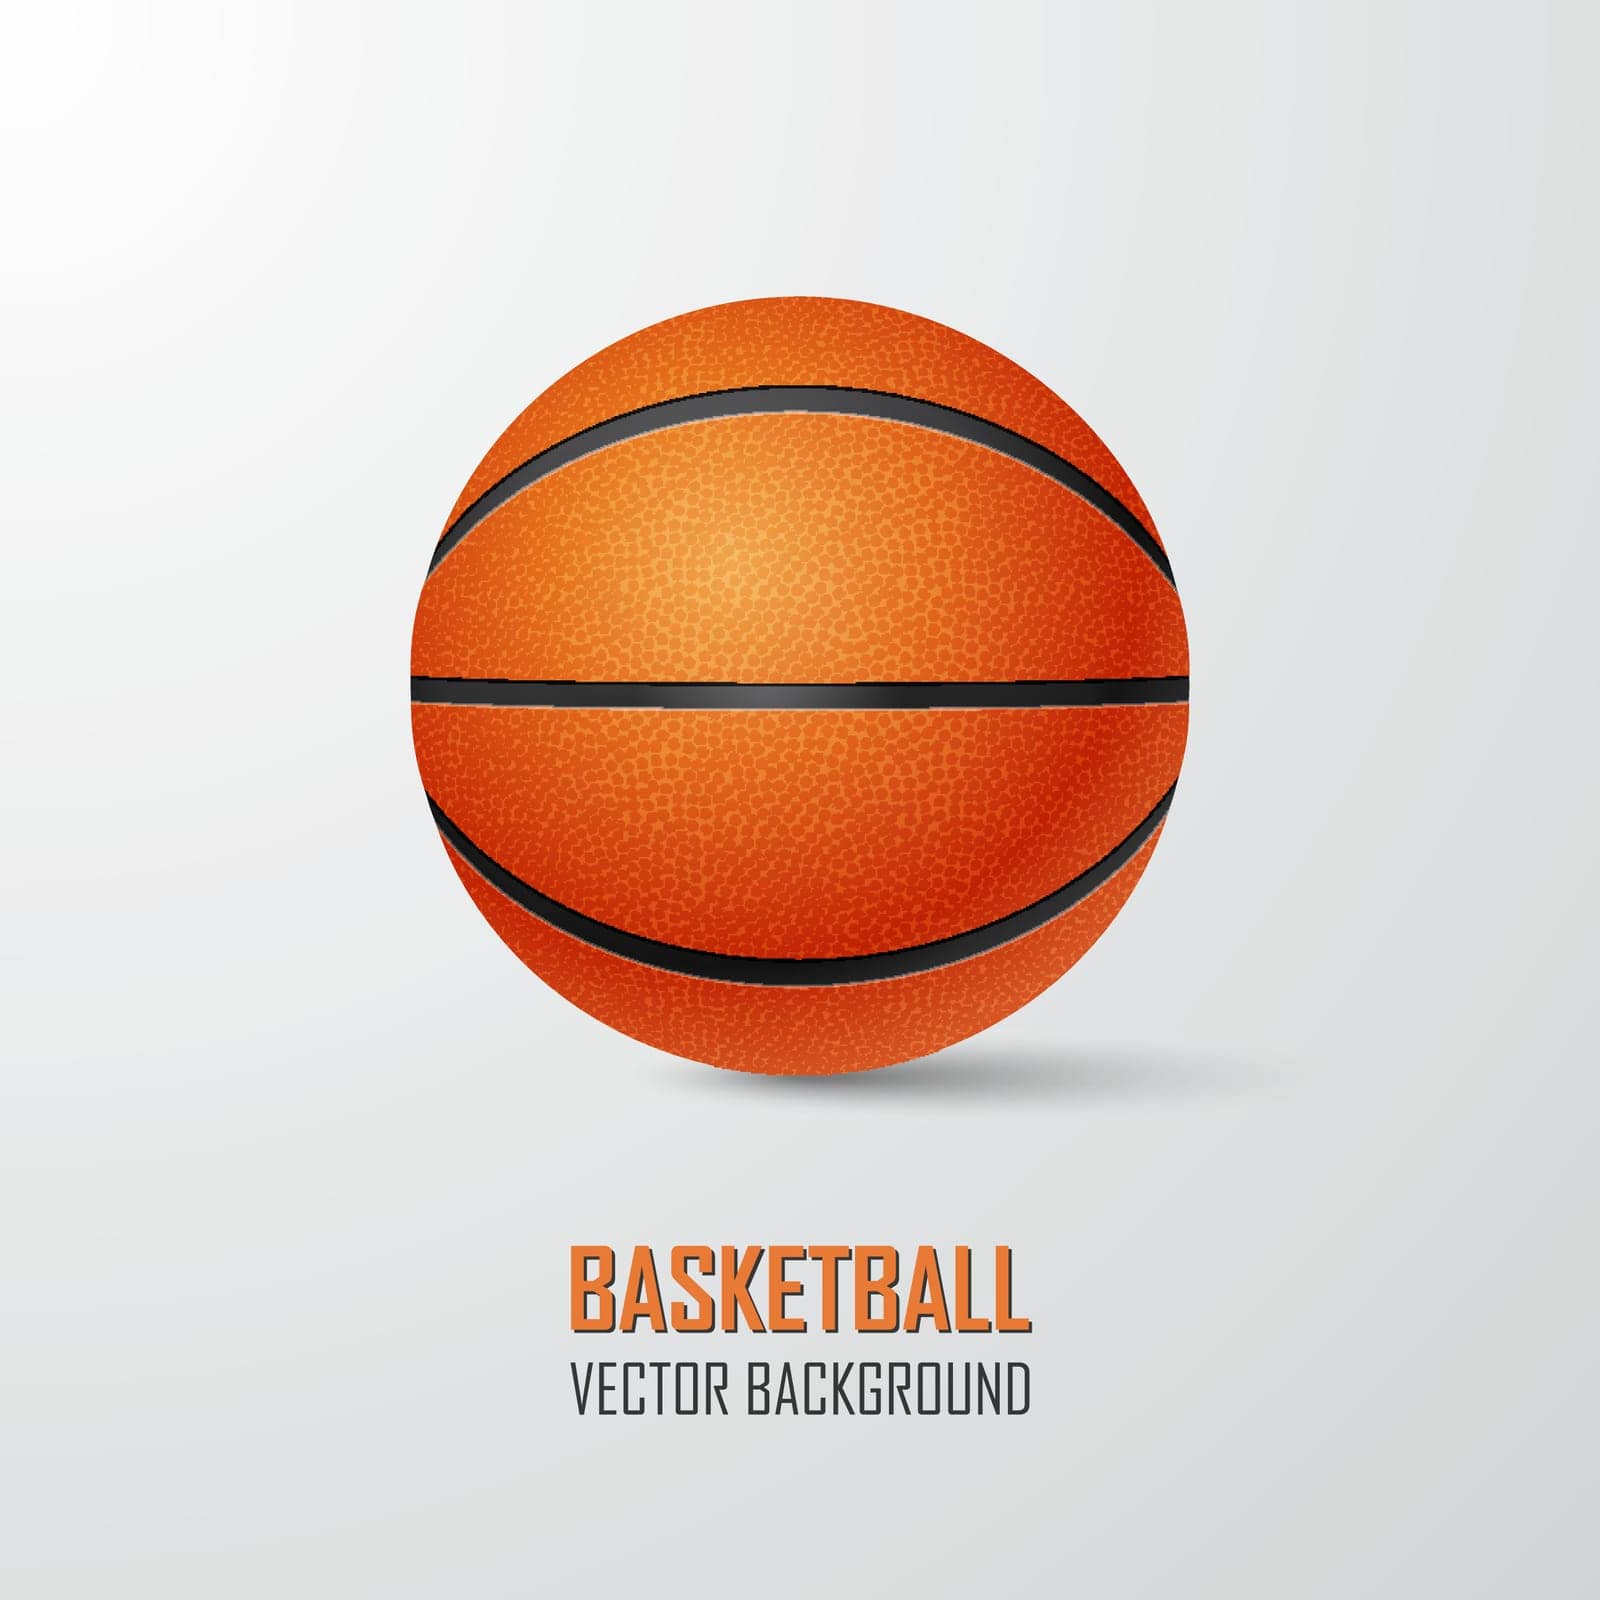 Basketball background by Gomolach